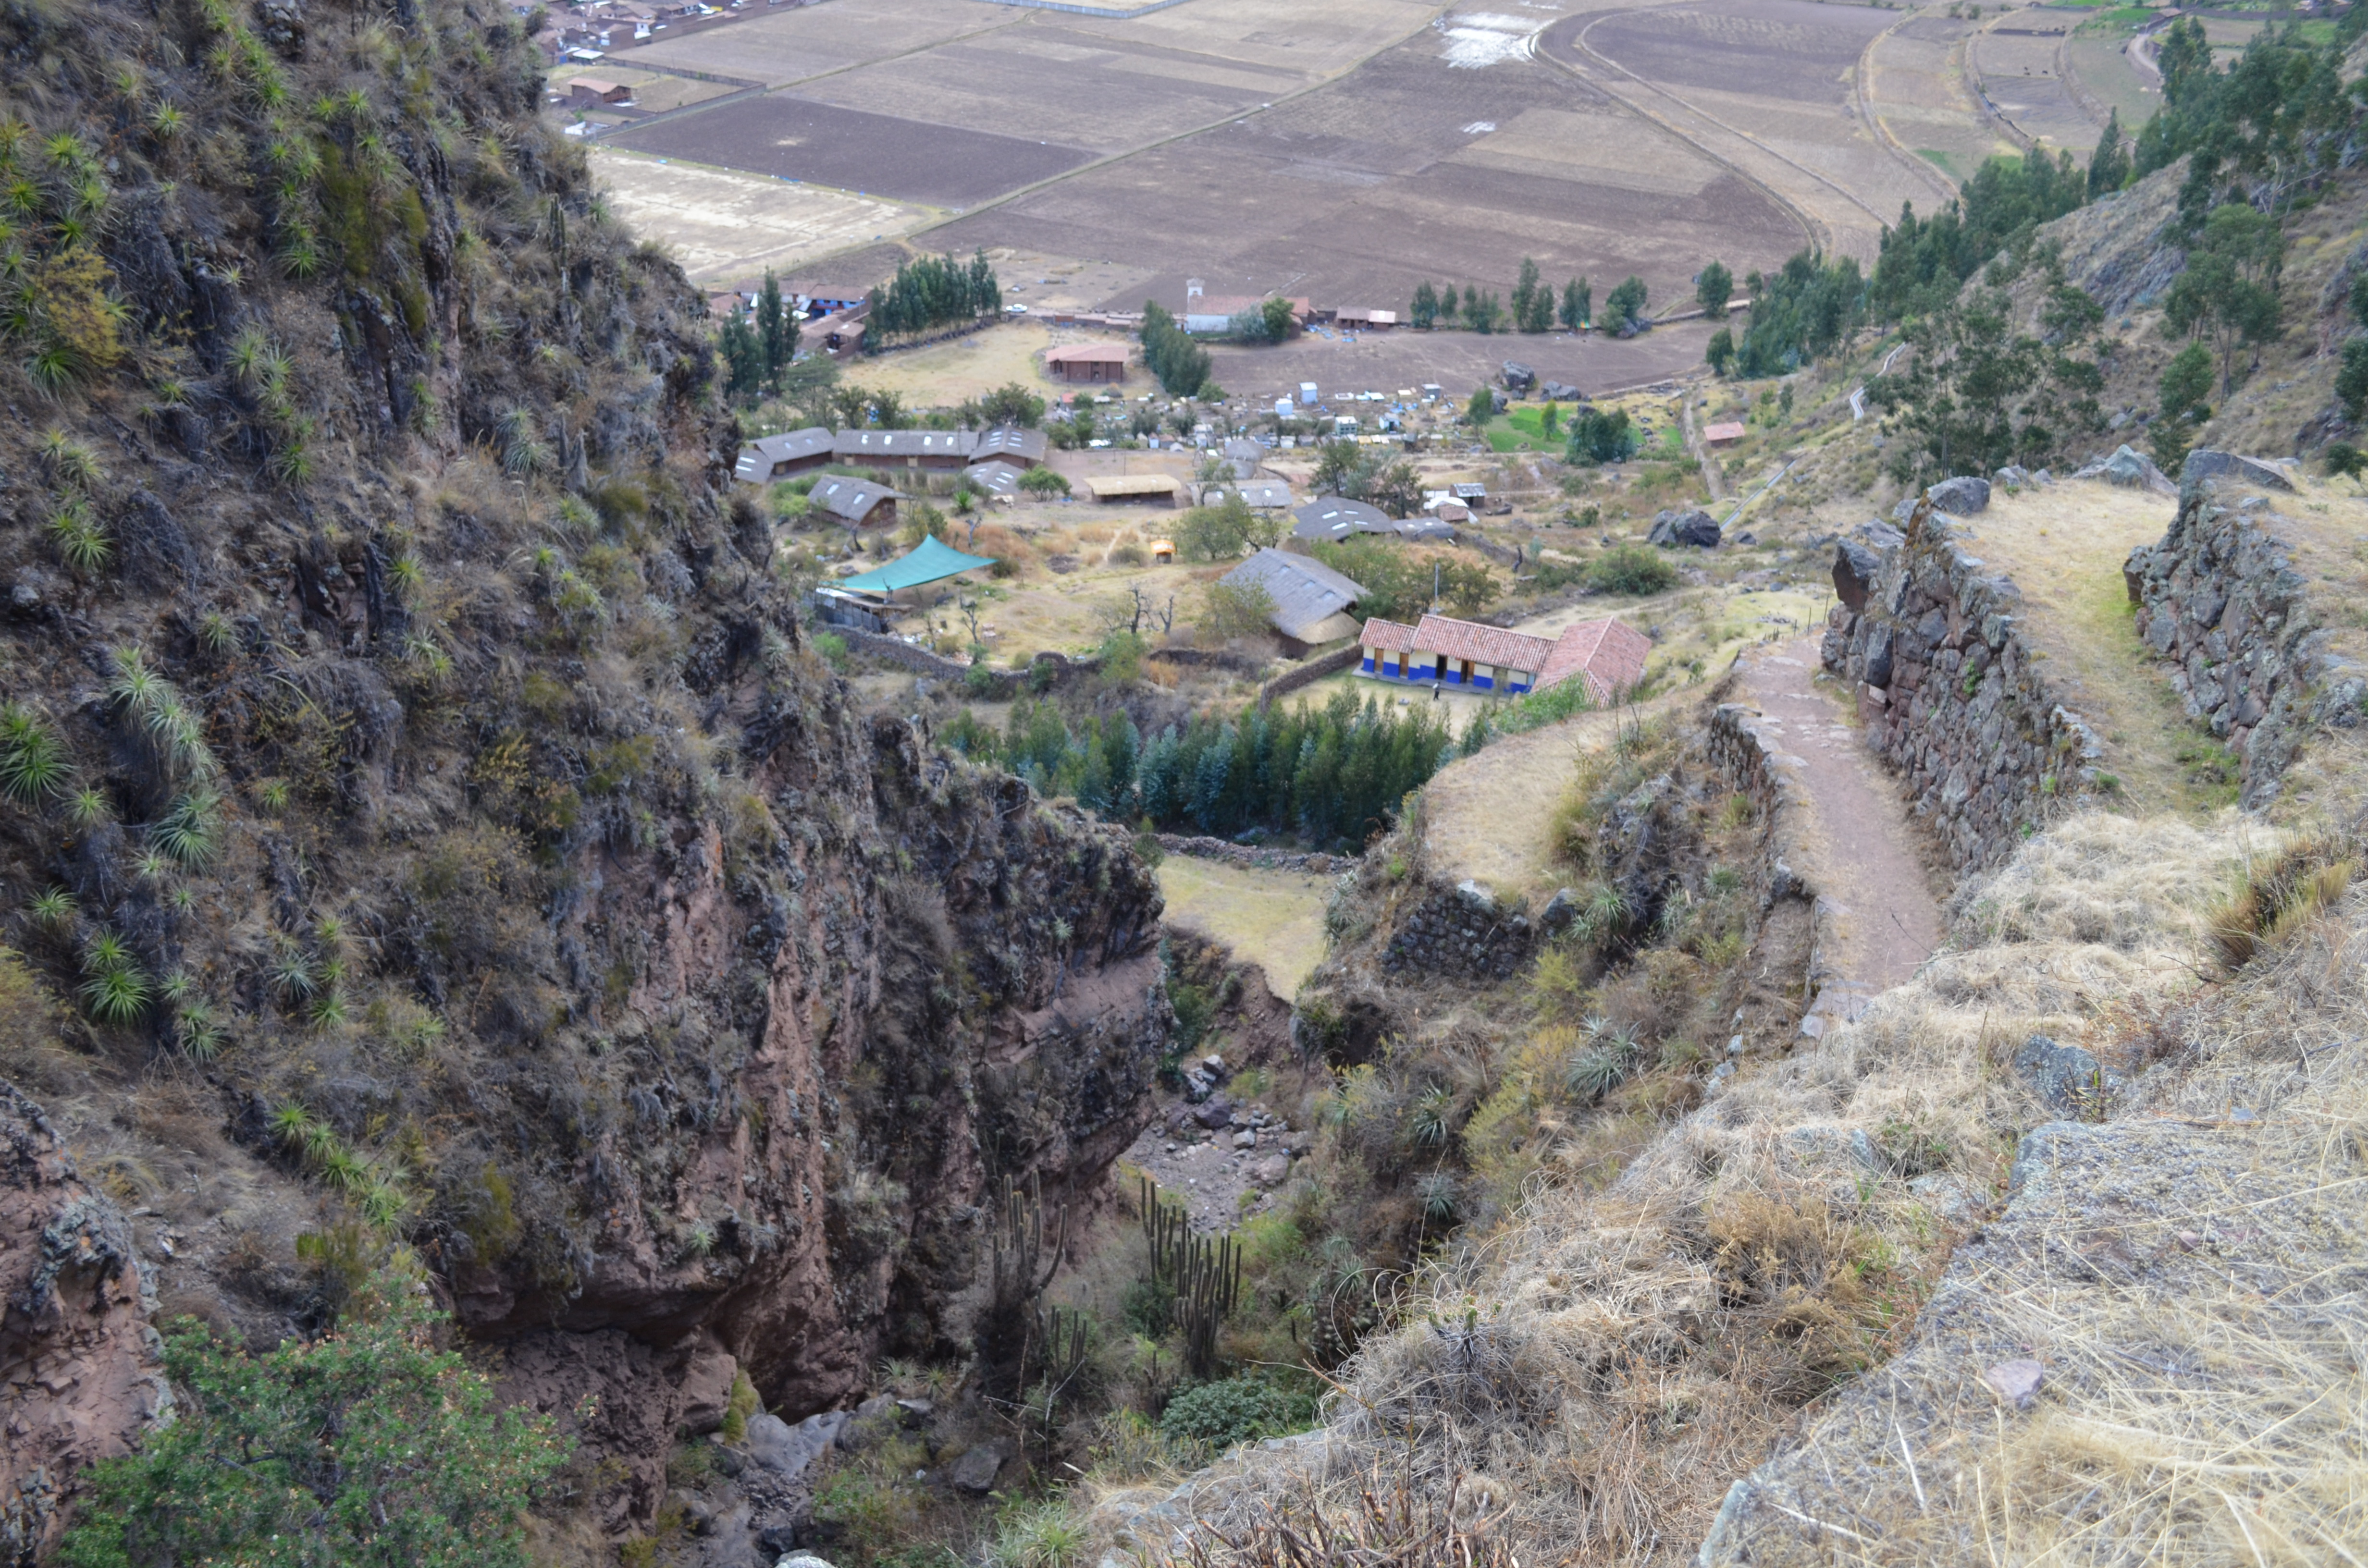 Peru Hiking Cusco Pisac Intihuatana | Affordable Adventure Travel